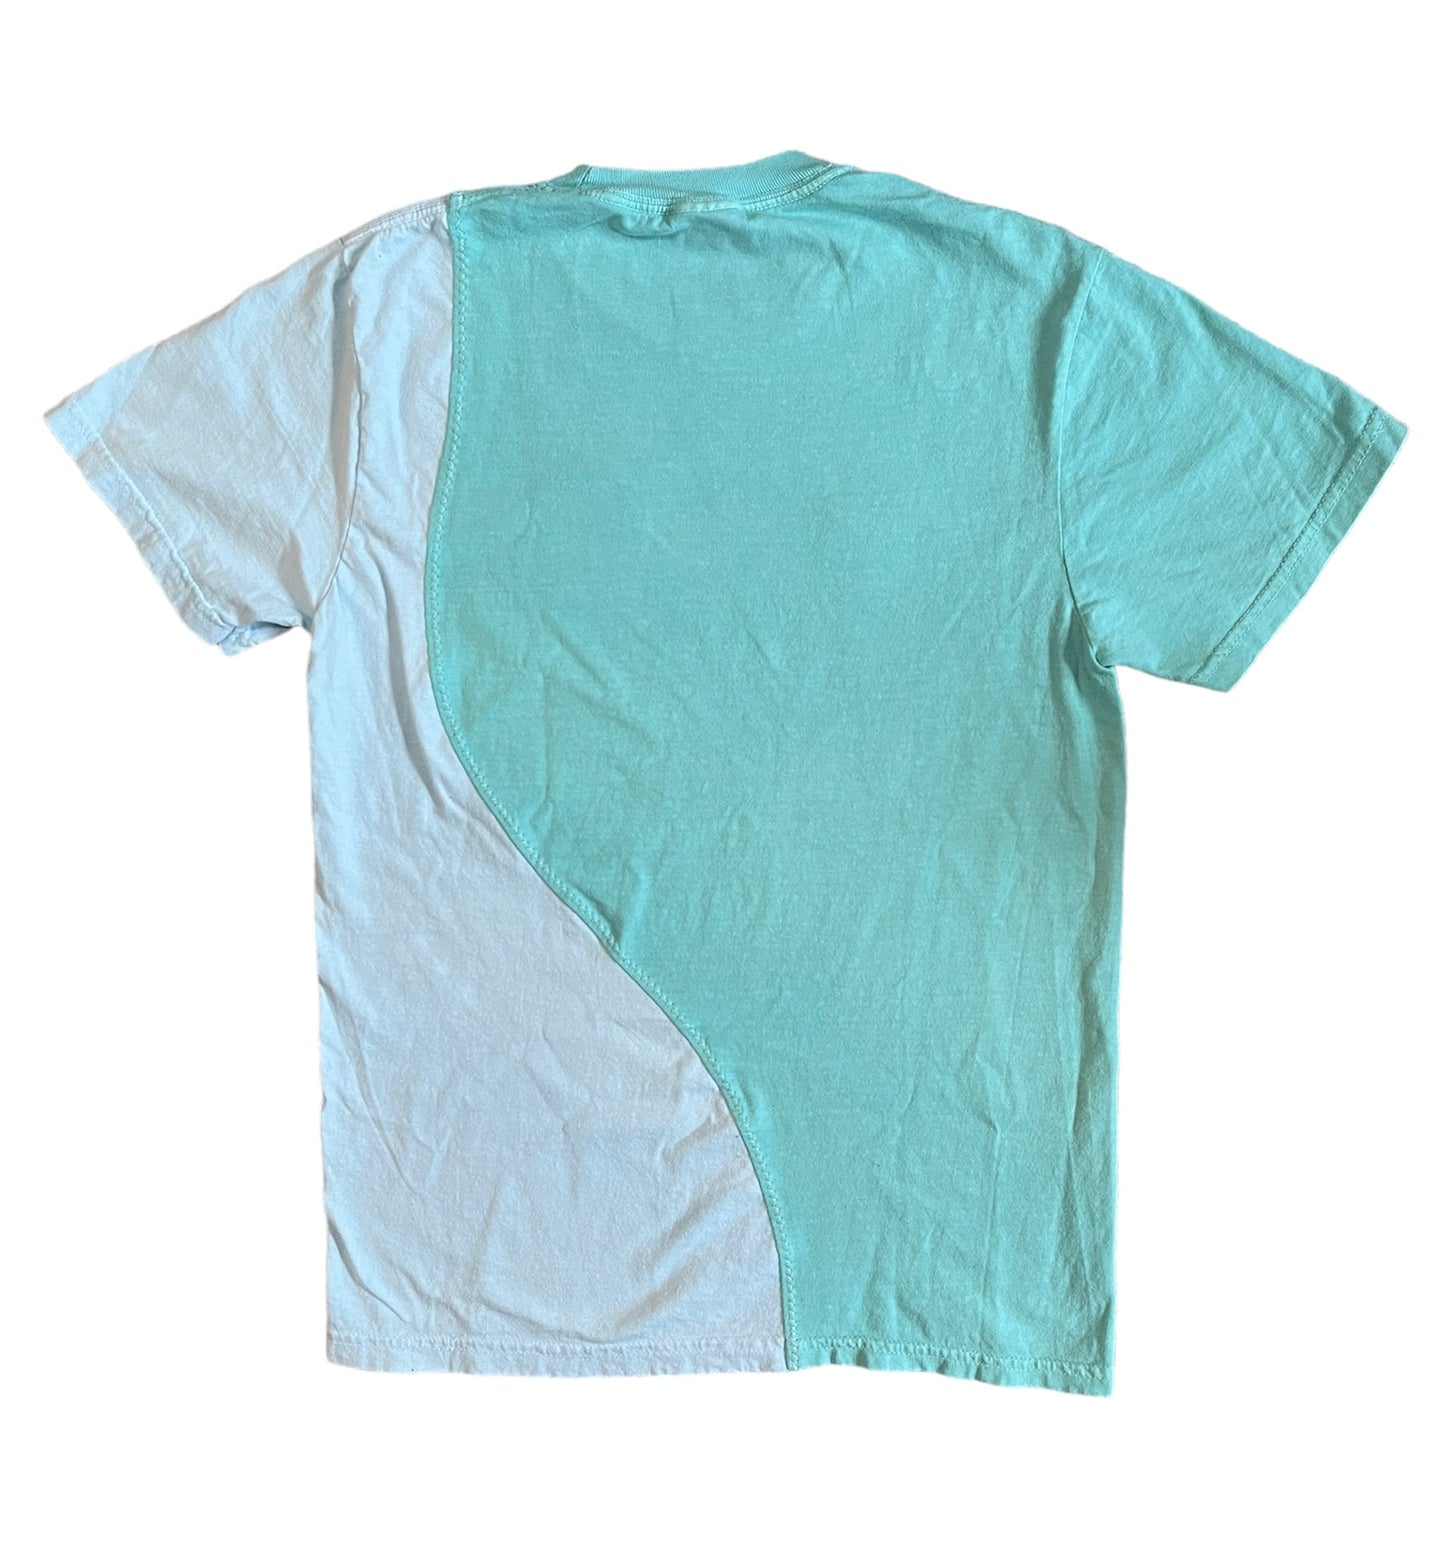 Turquoise / Light Blue T-Shirt SM